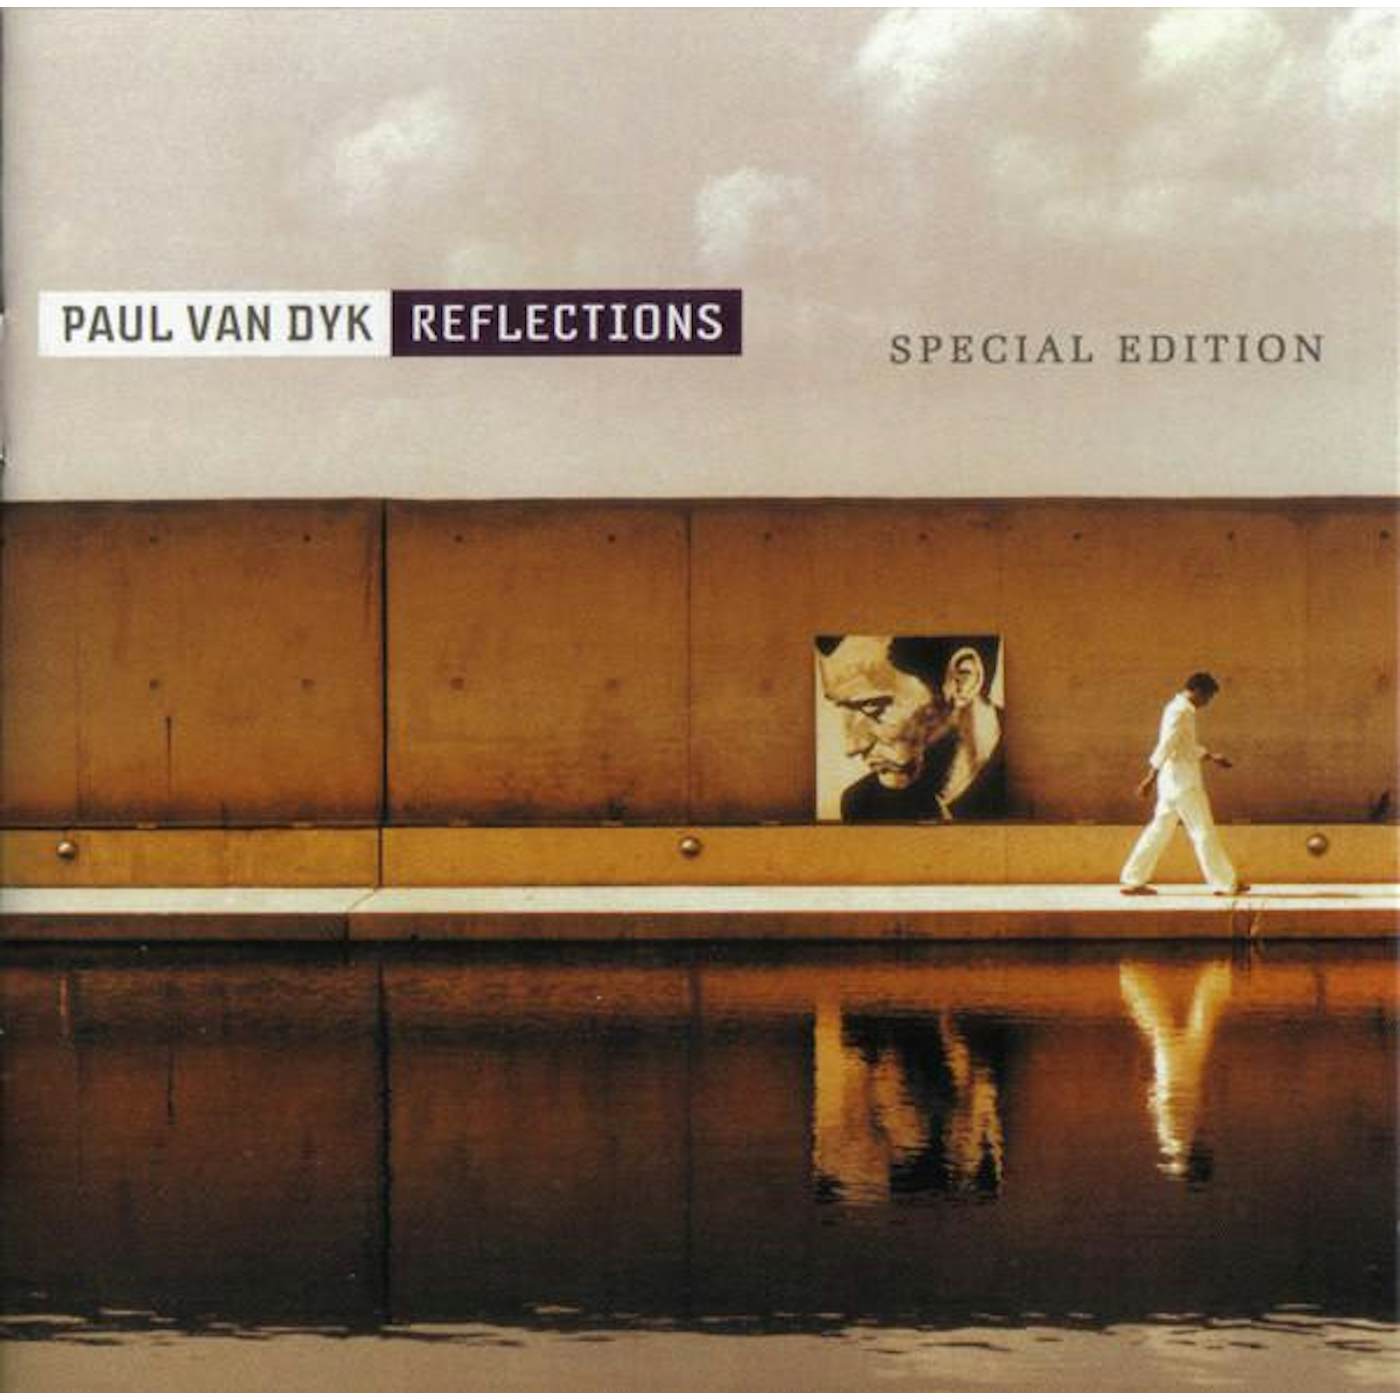 Paul van Dyk REFLECTIONS CD